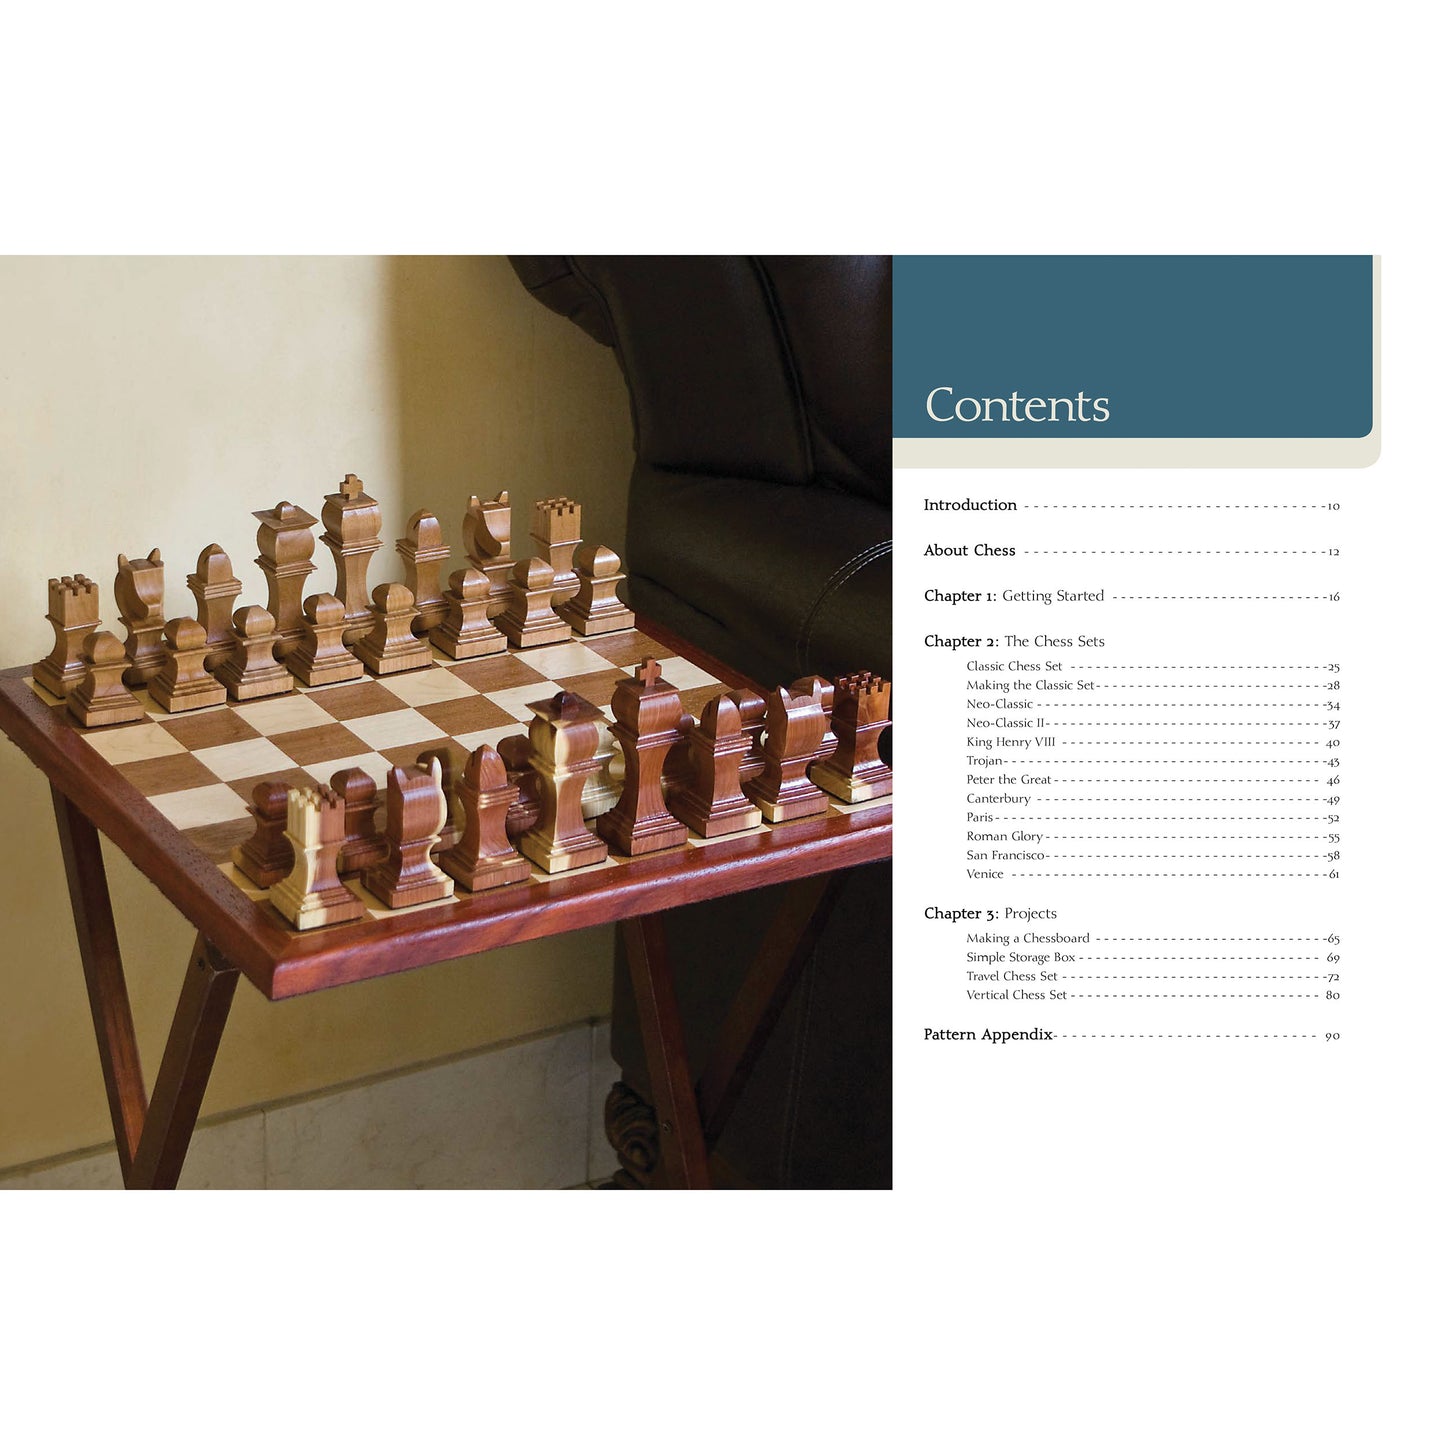 Making Wooden Chess Sets alt 0